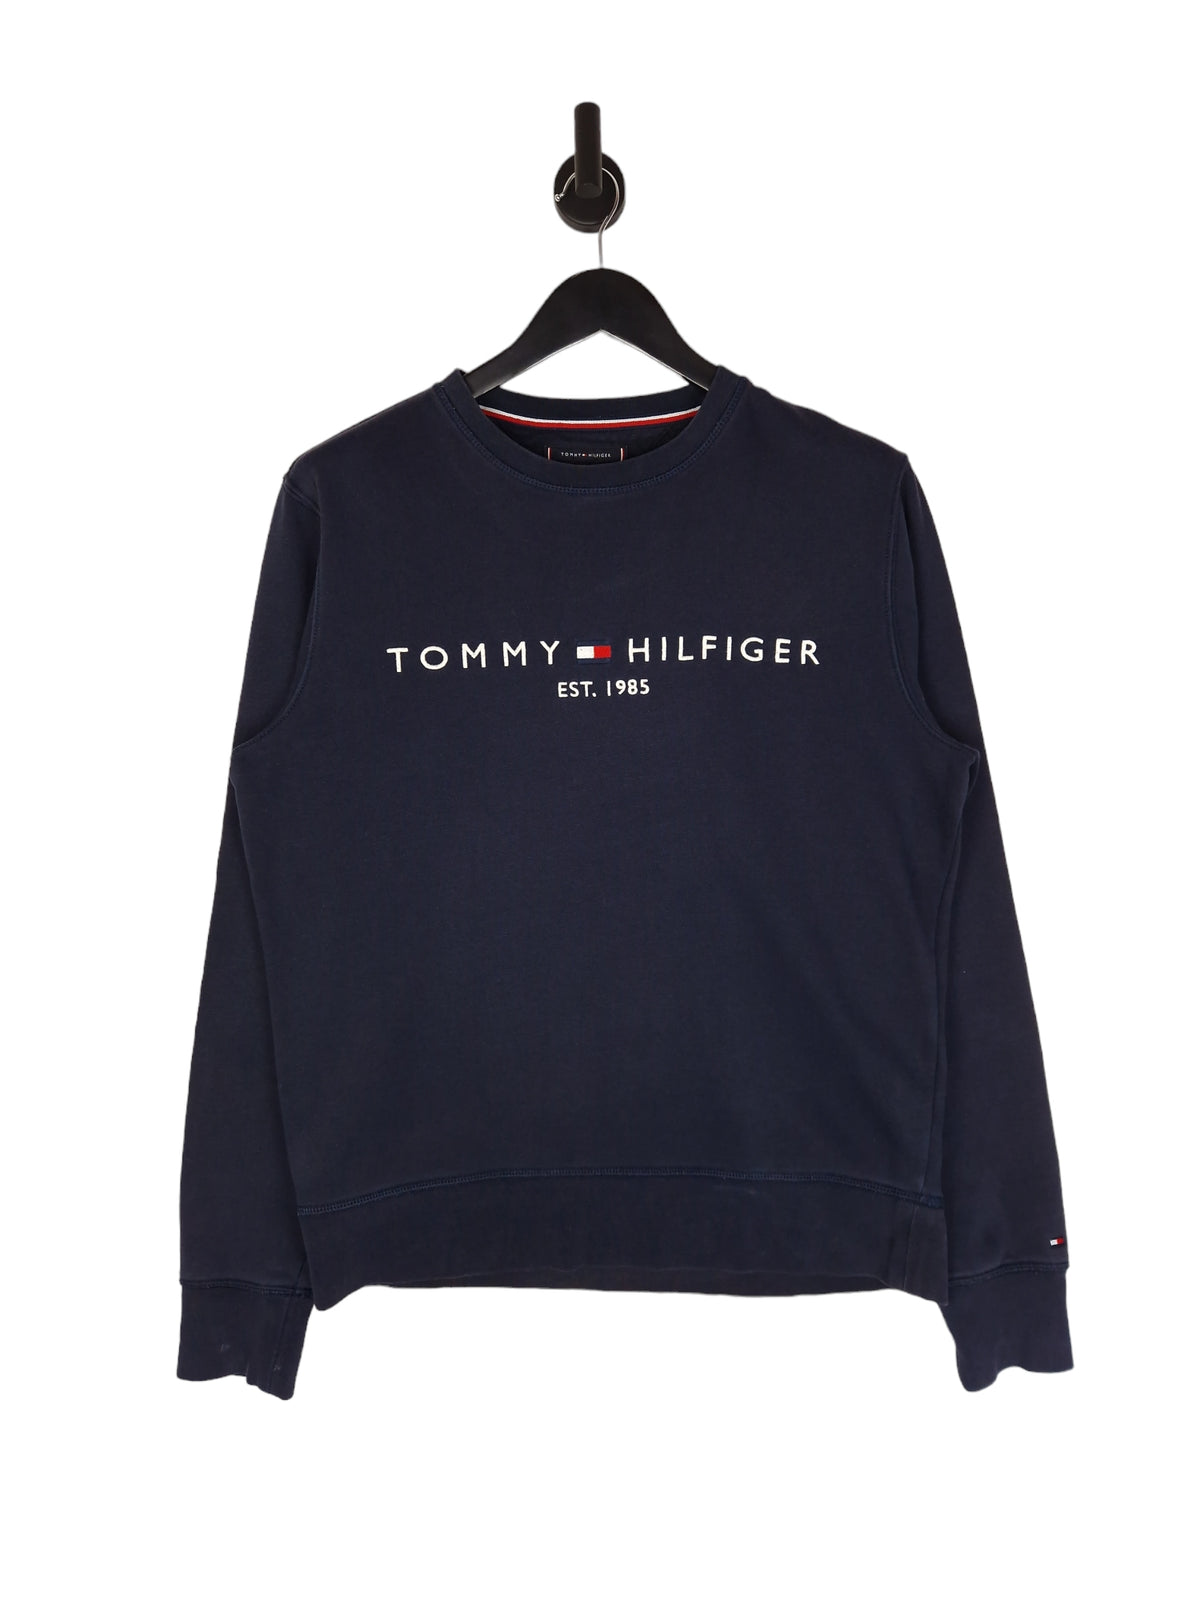 Tommy Hilfiger Spell Out Sweatshirt - Size Medium